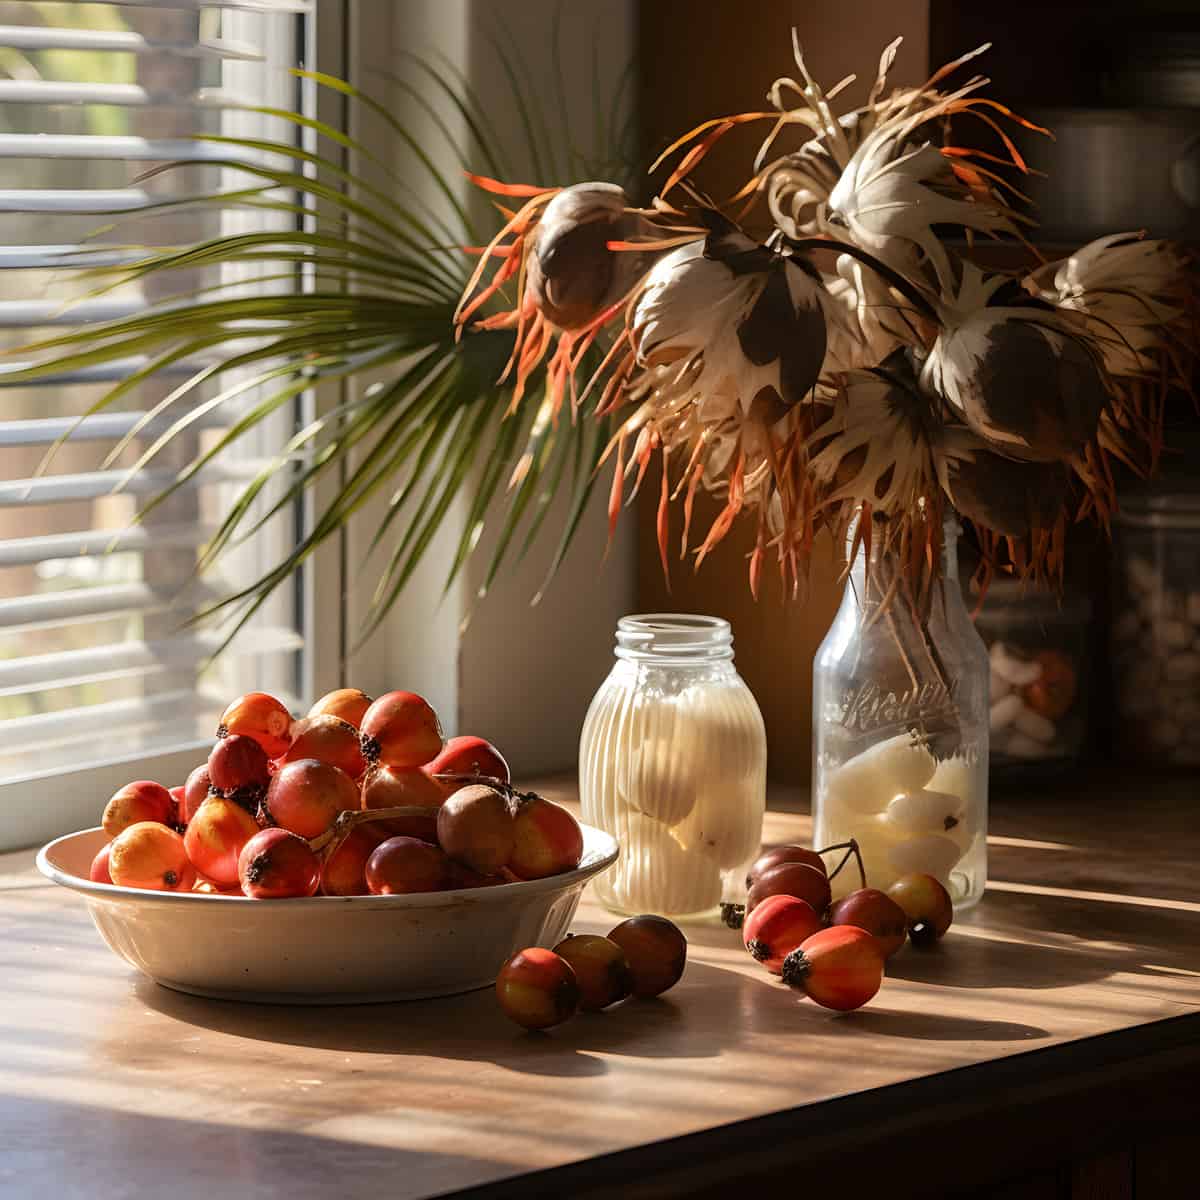 Sabal Palm Fruit on a kitchen counter